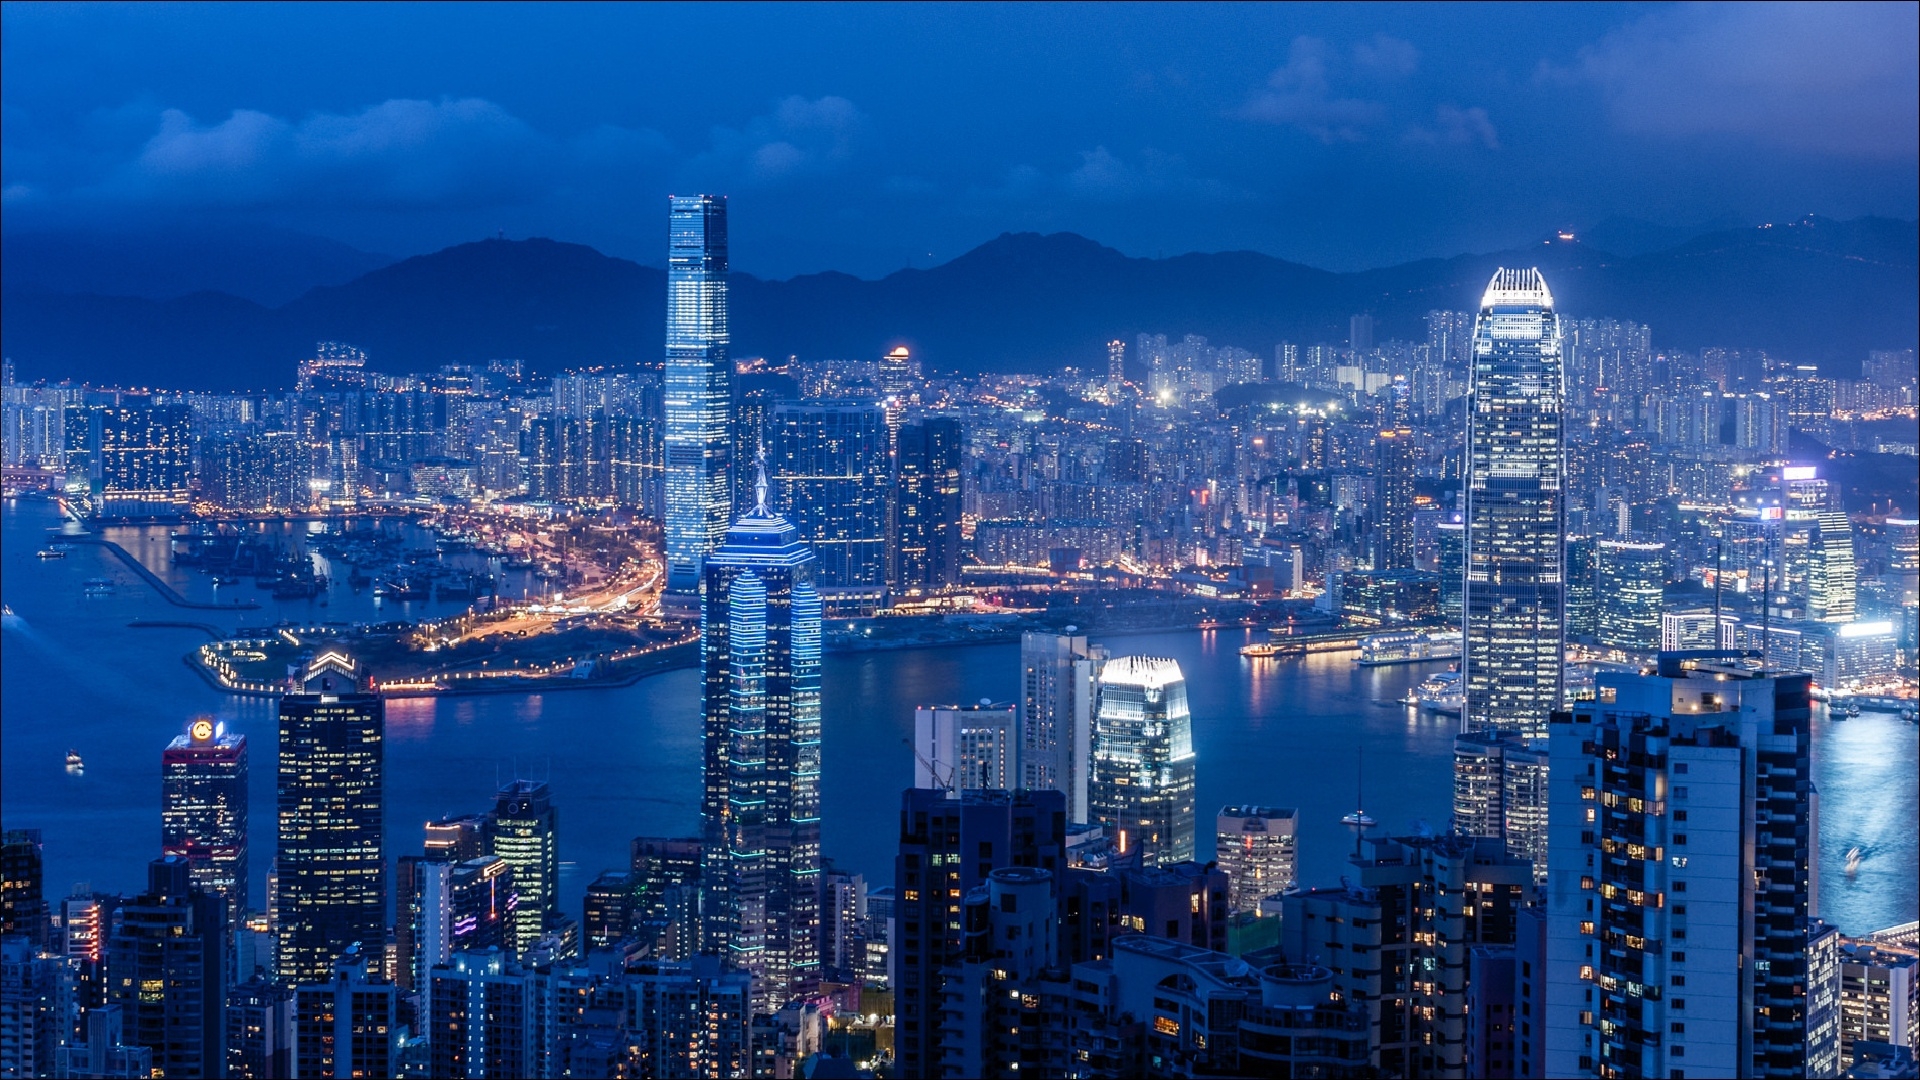 Hong Kong HD Night Cityscape Wallpaper, HD City 4K Wallpapers, Images ...